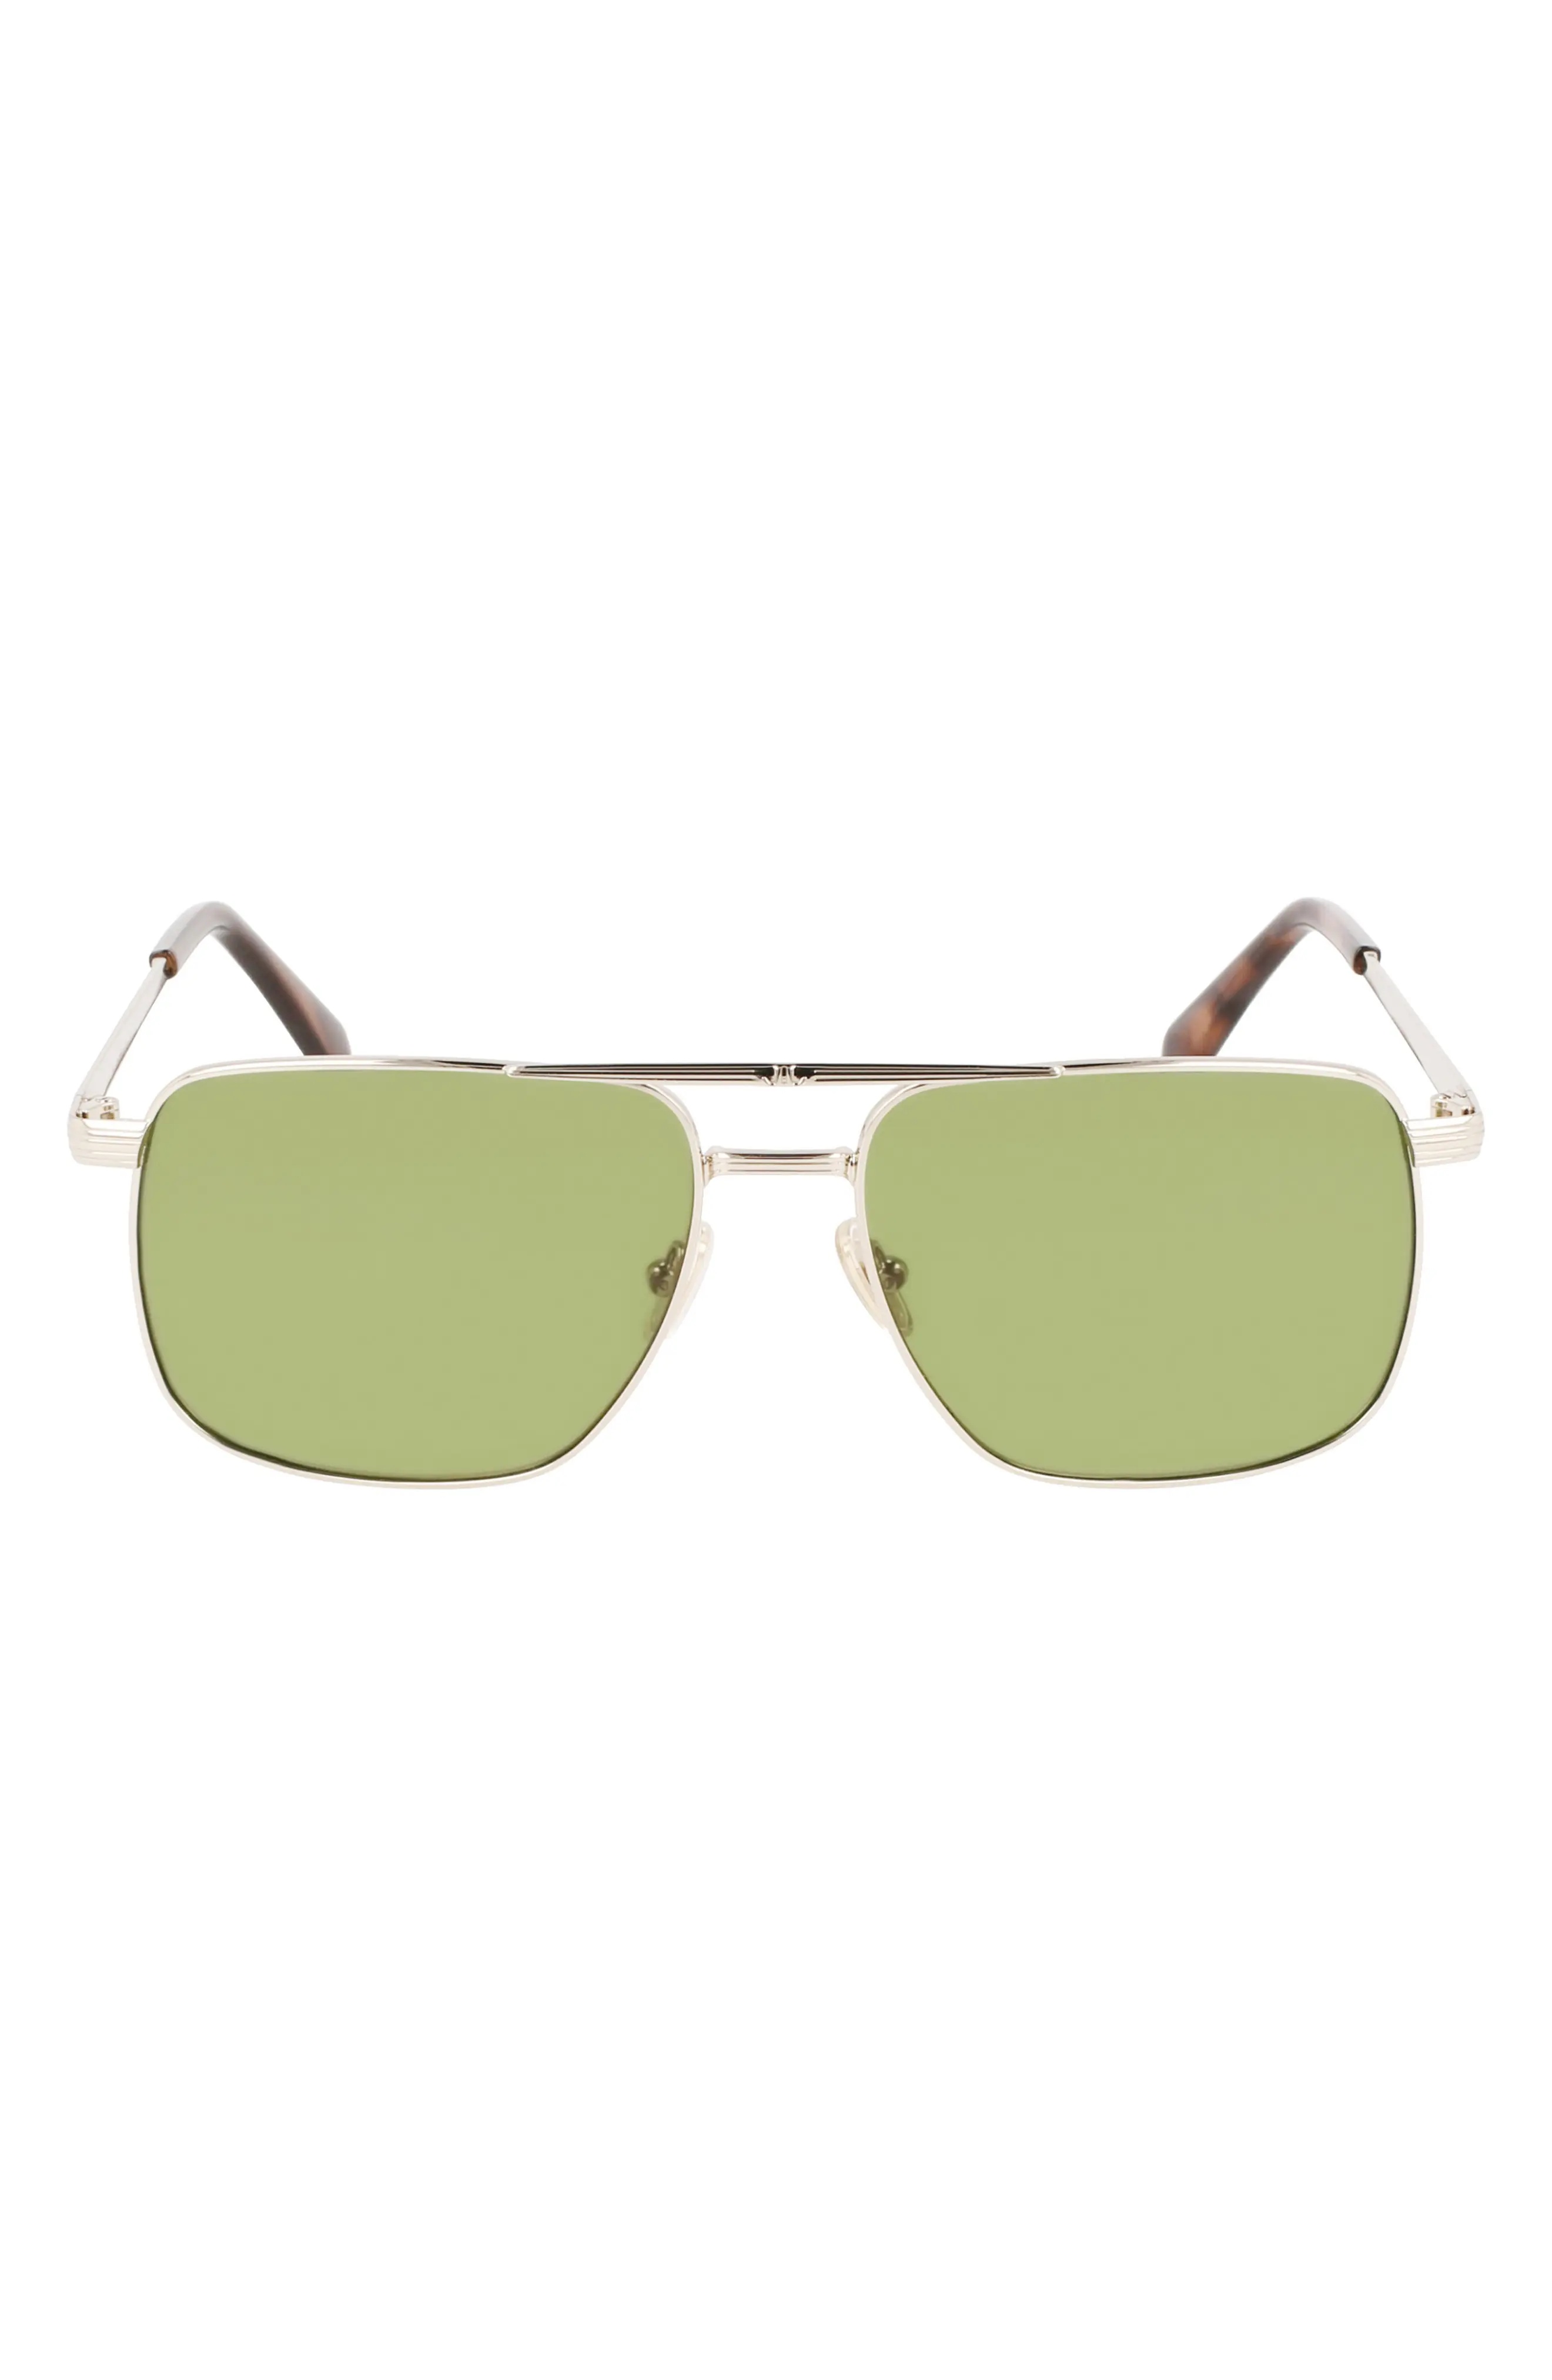 JL 58mm Rectangular Sunglasses in Gold /Green - 1